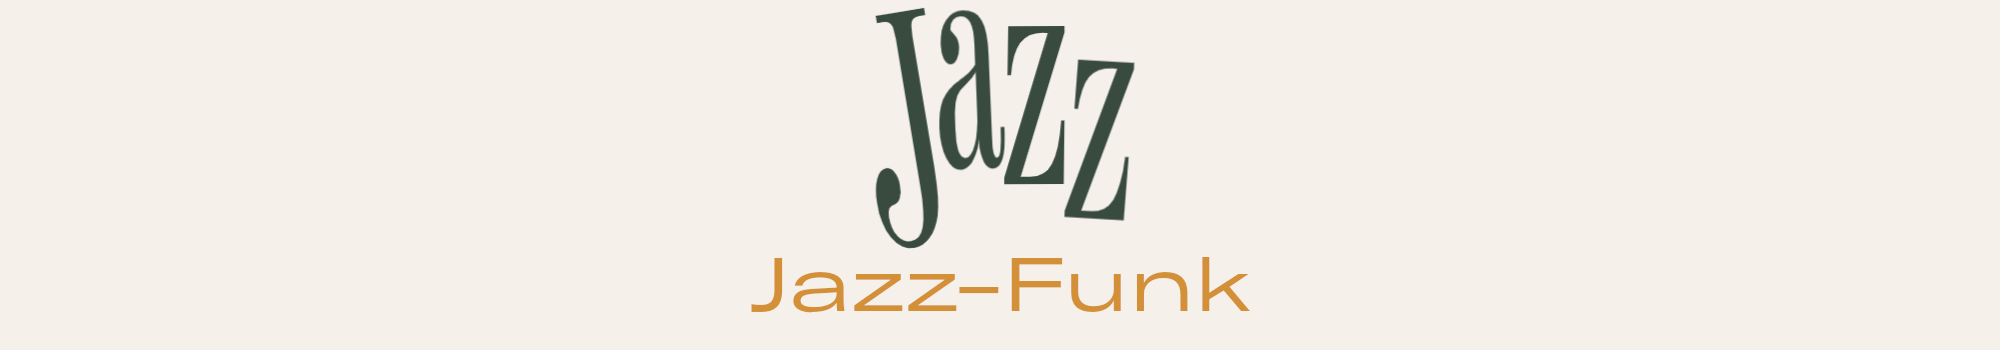 Rubrik till kategori: Jazz - Jazz-Funk